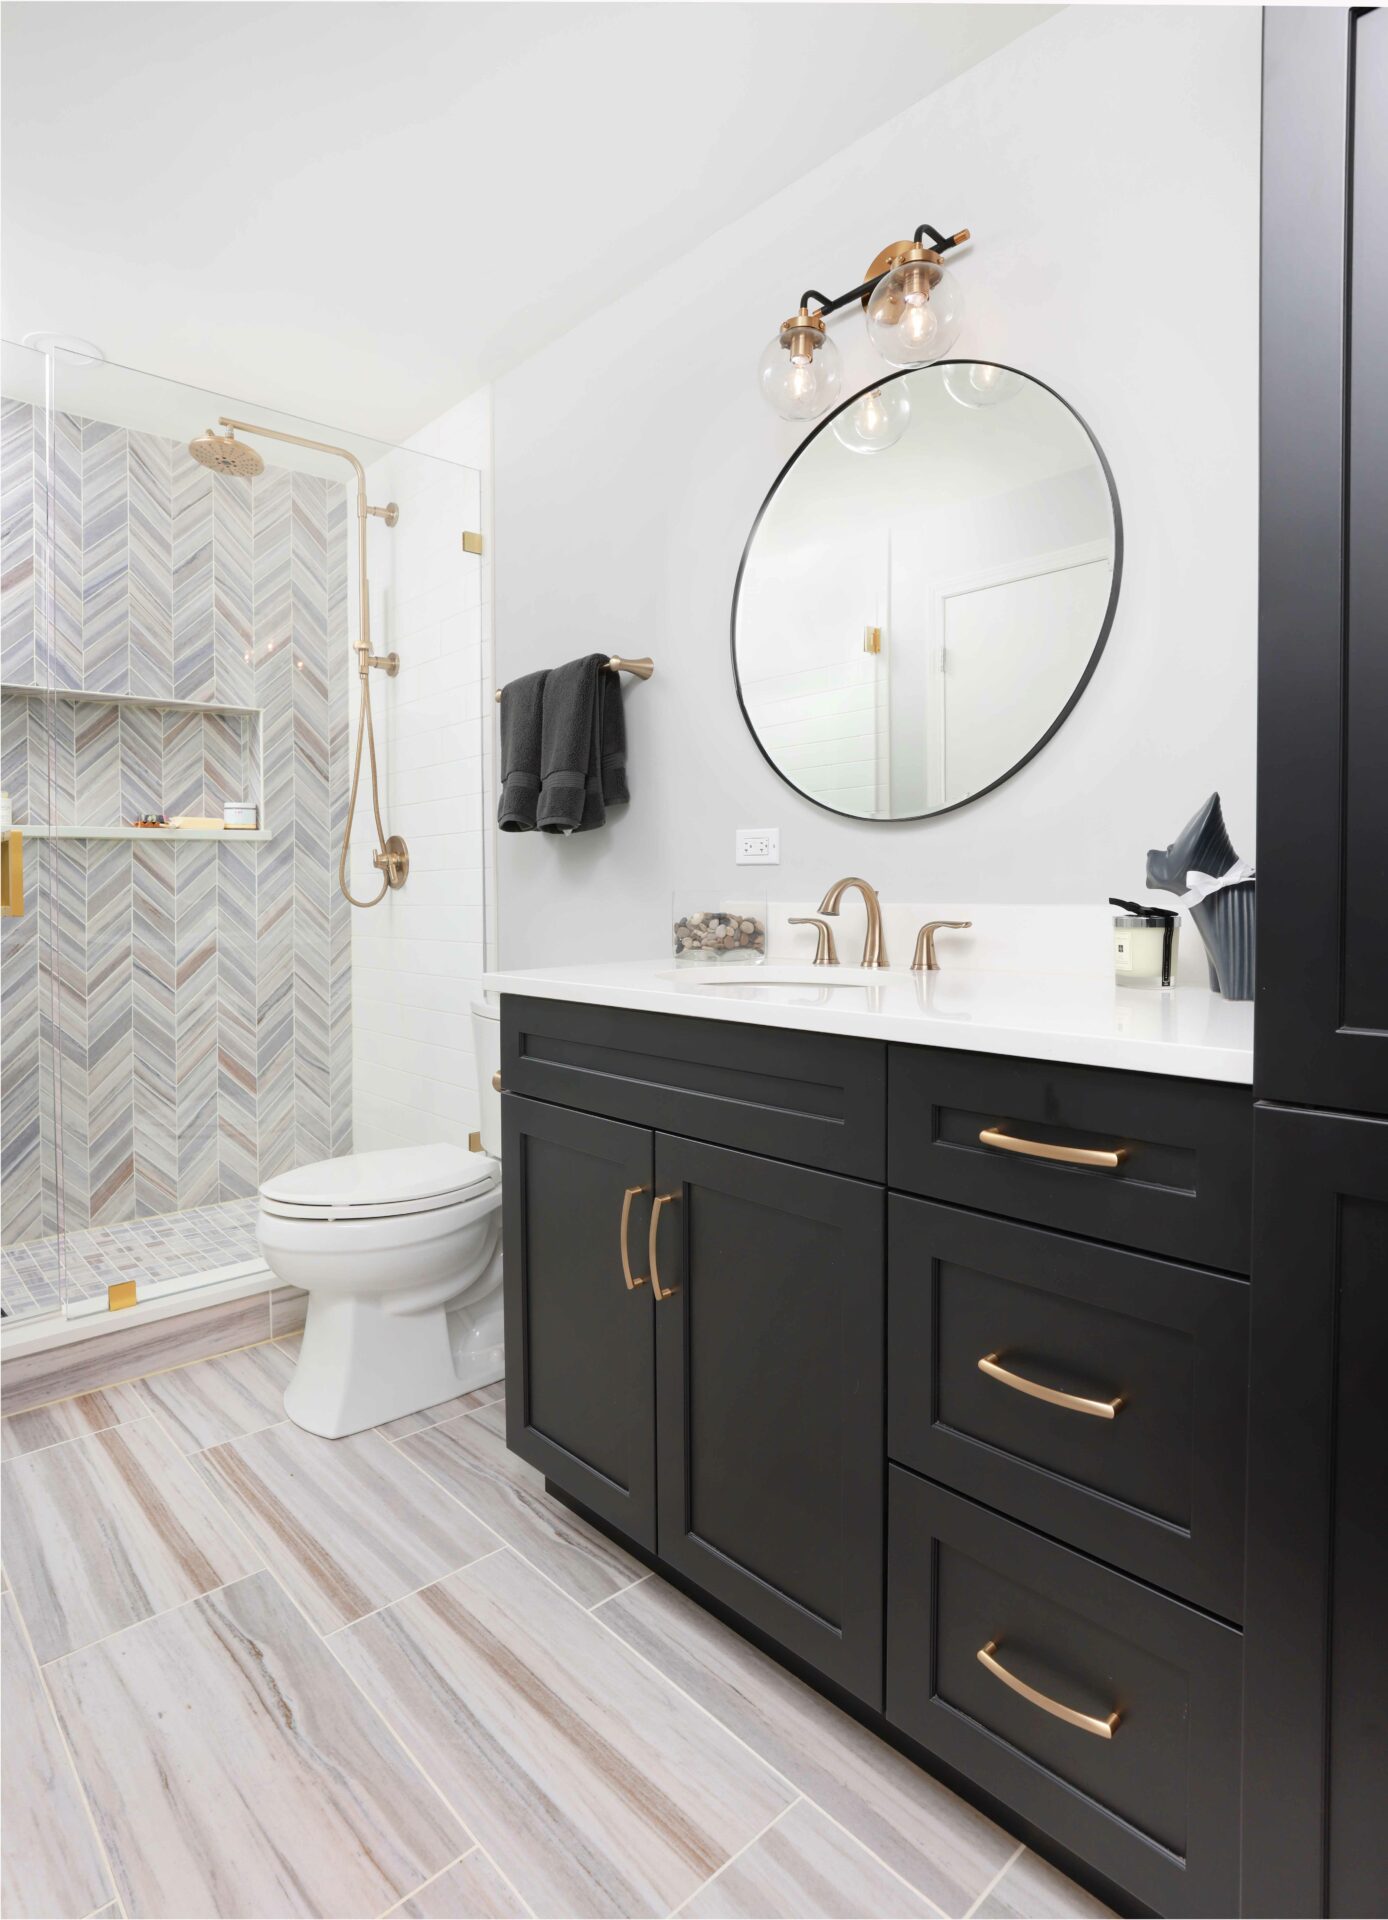 primary bathroom with chevron tile in shower, gold fixtures and dark vanity